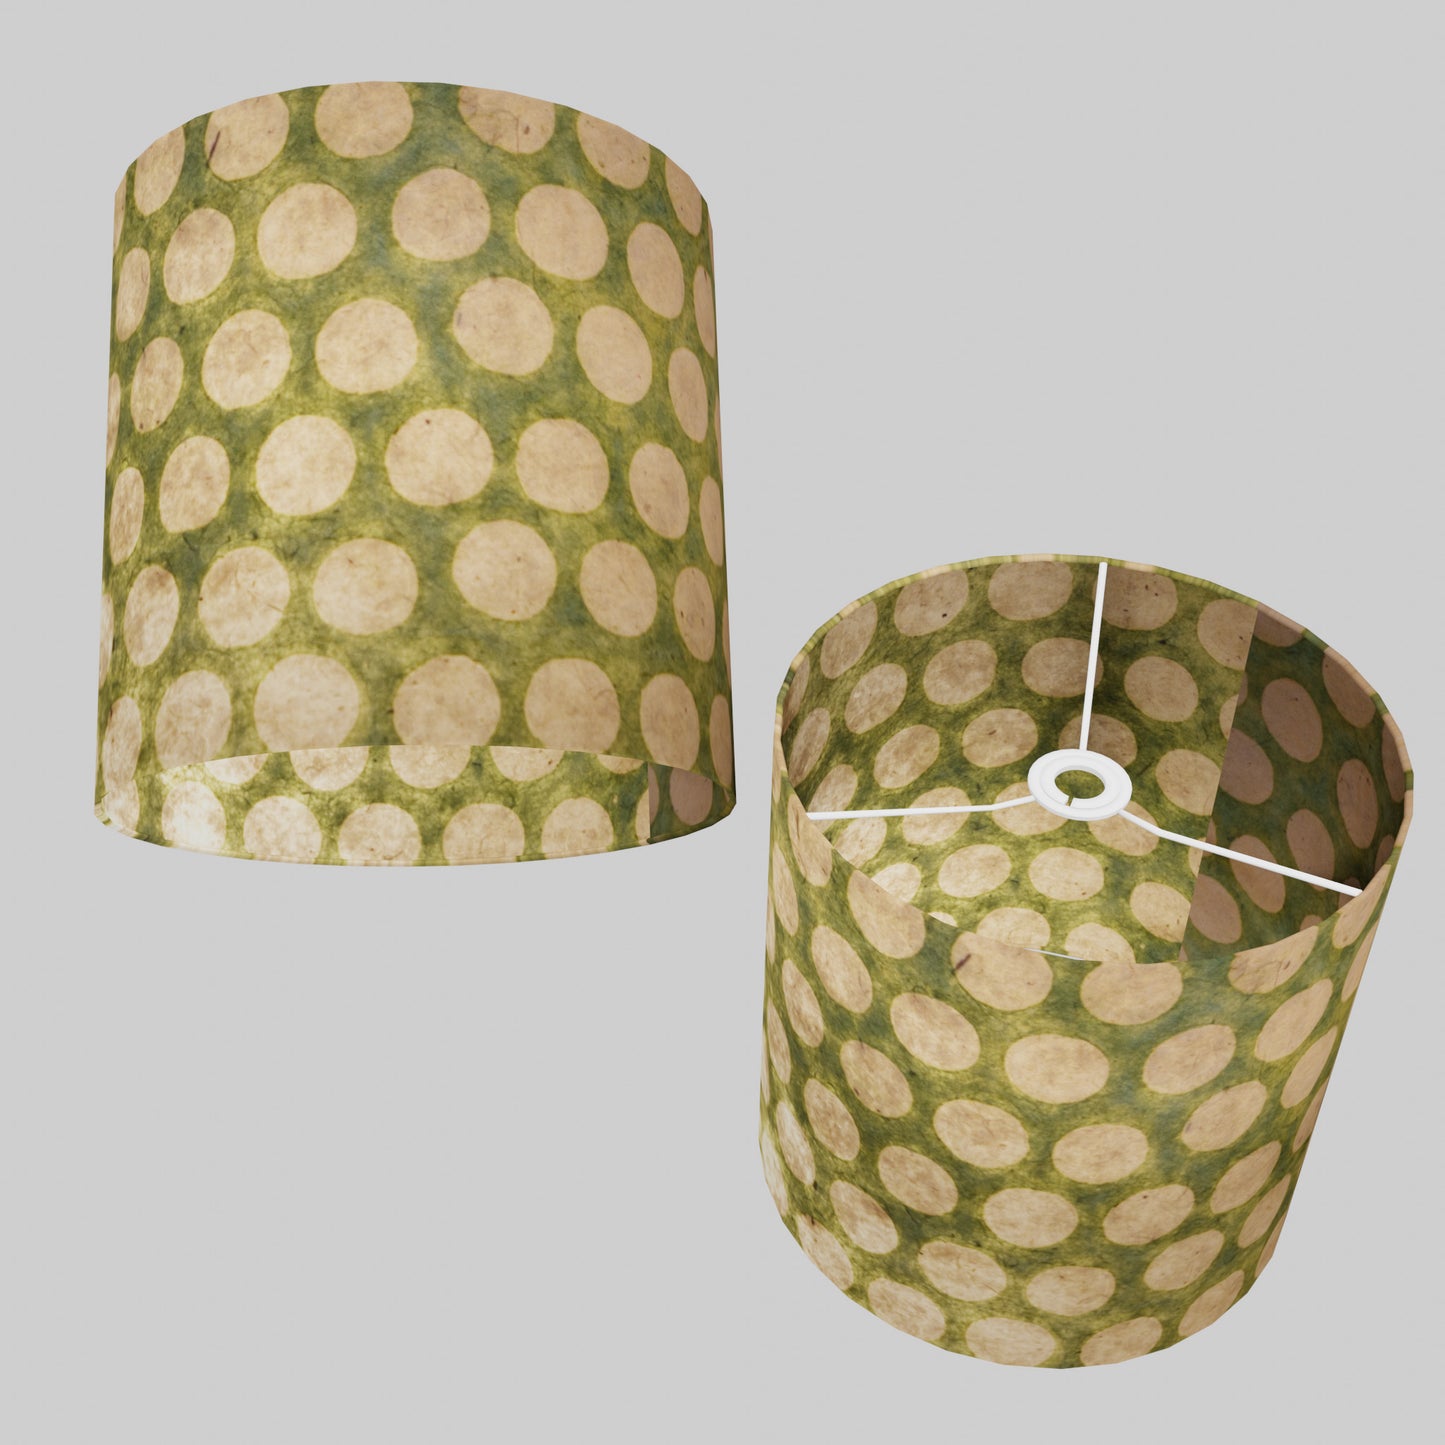 Drum Lamp Shade - P87 ~ Batik Dots on Green, 30cm(d) x 30cm(h)